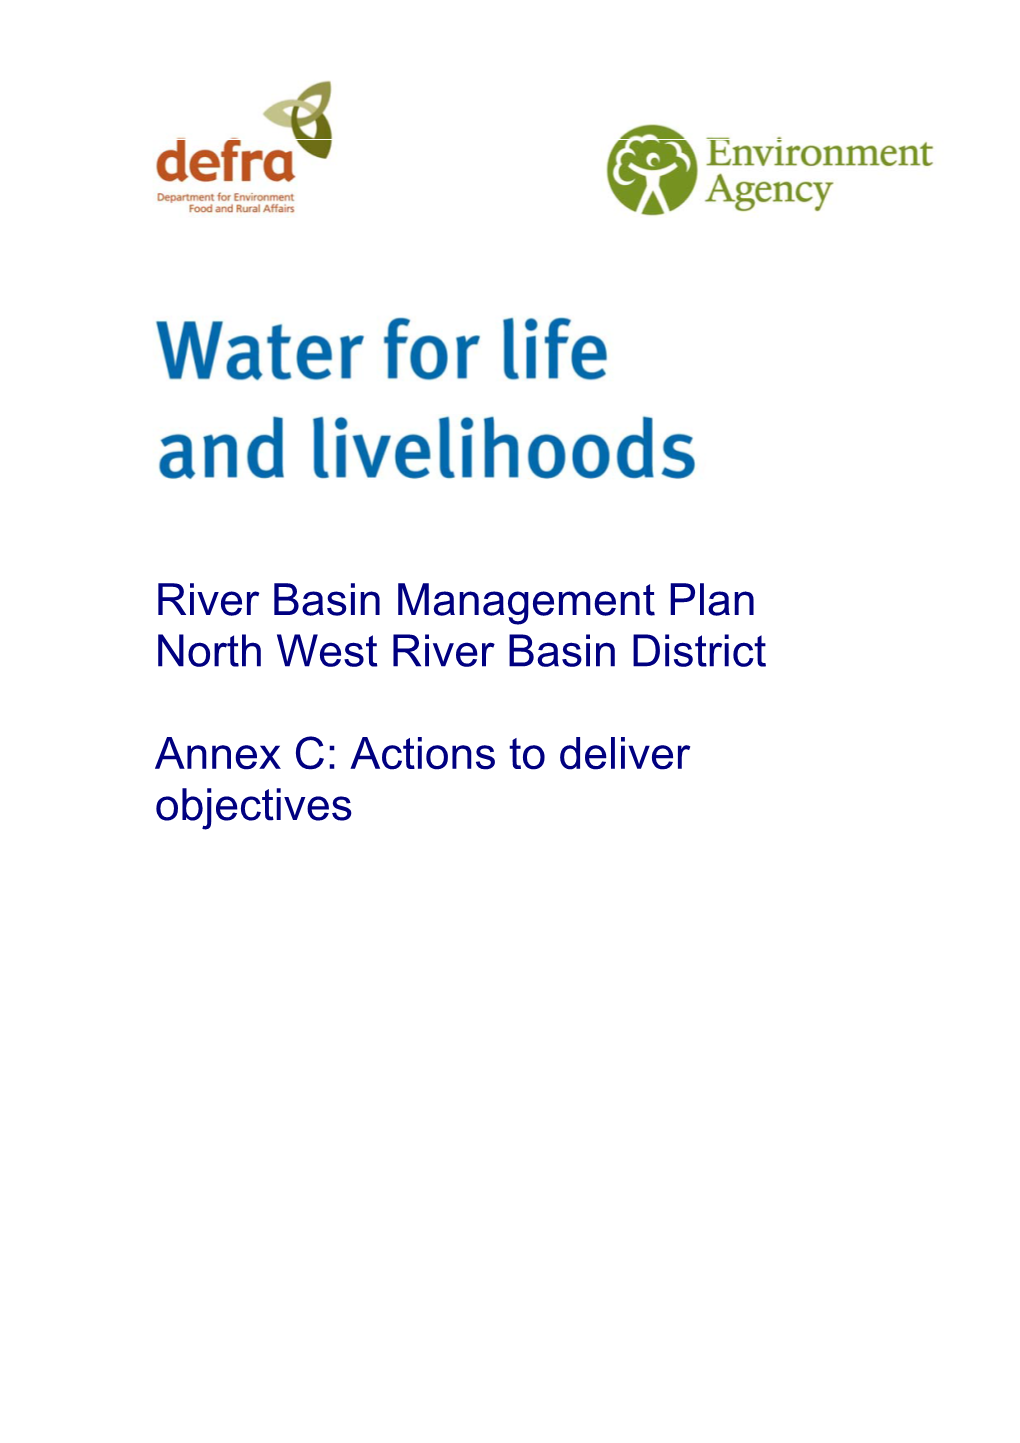 River Basin Management Plan North West River Basin District